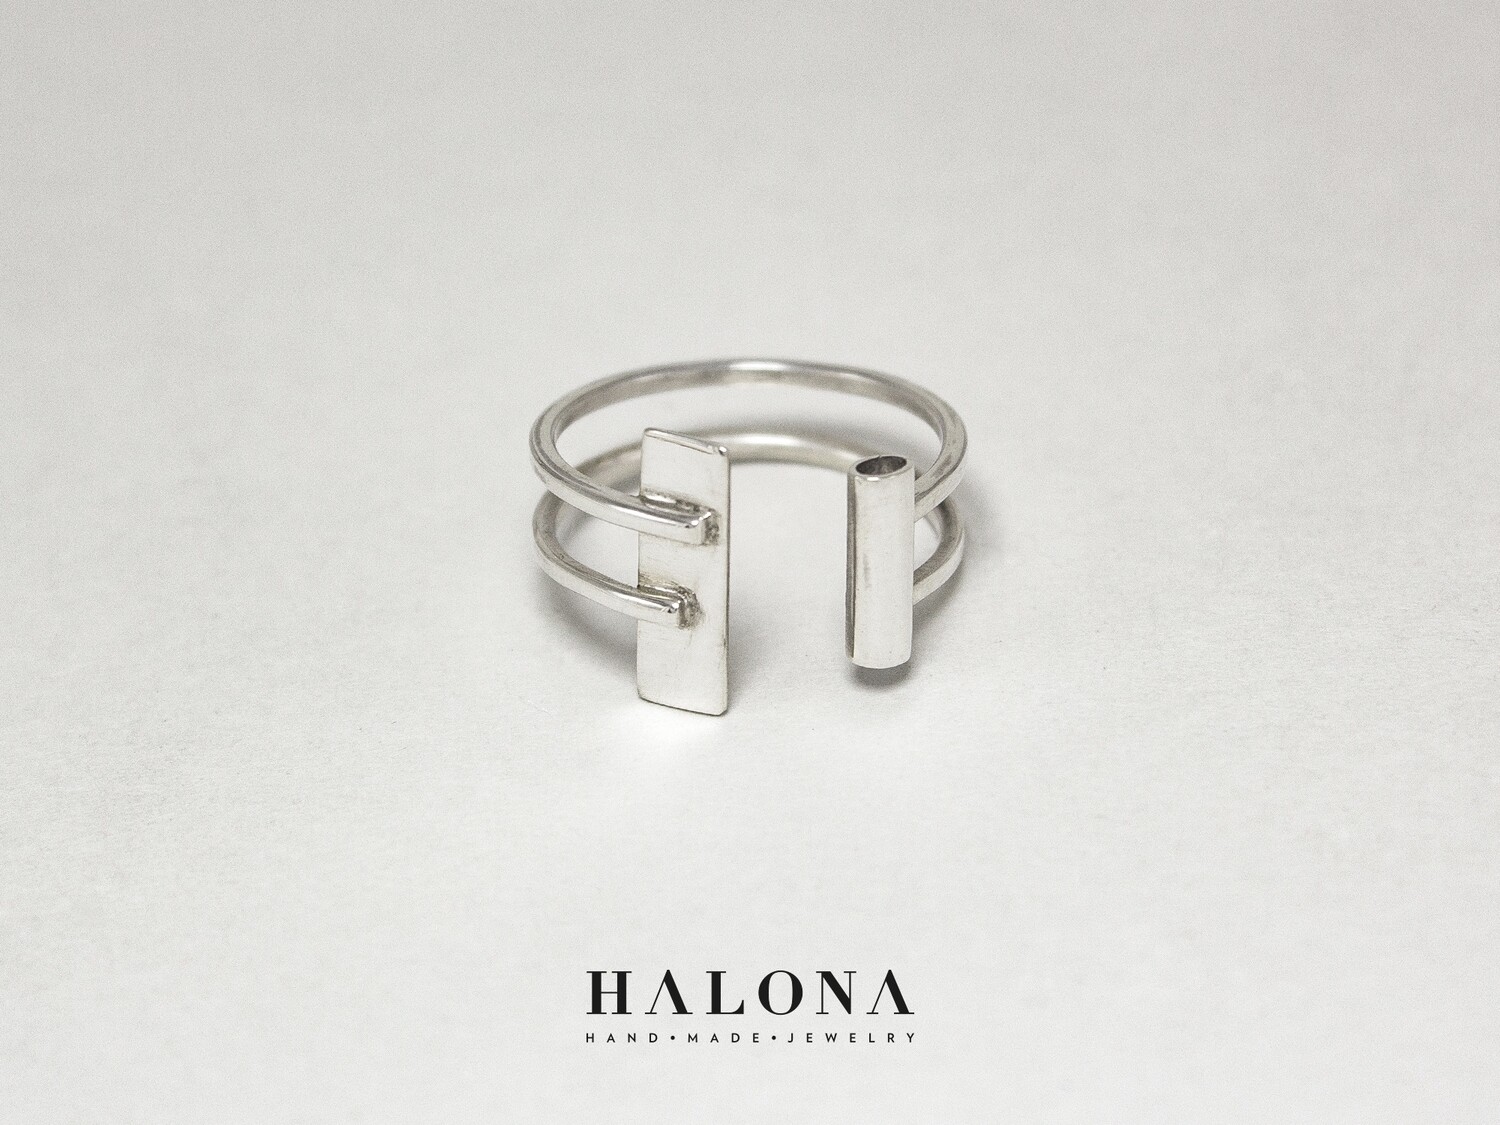 Handmade modern silver ring.